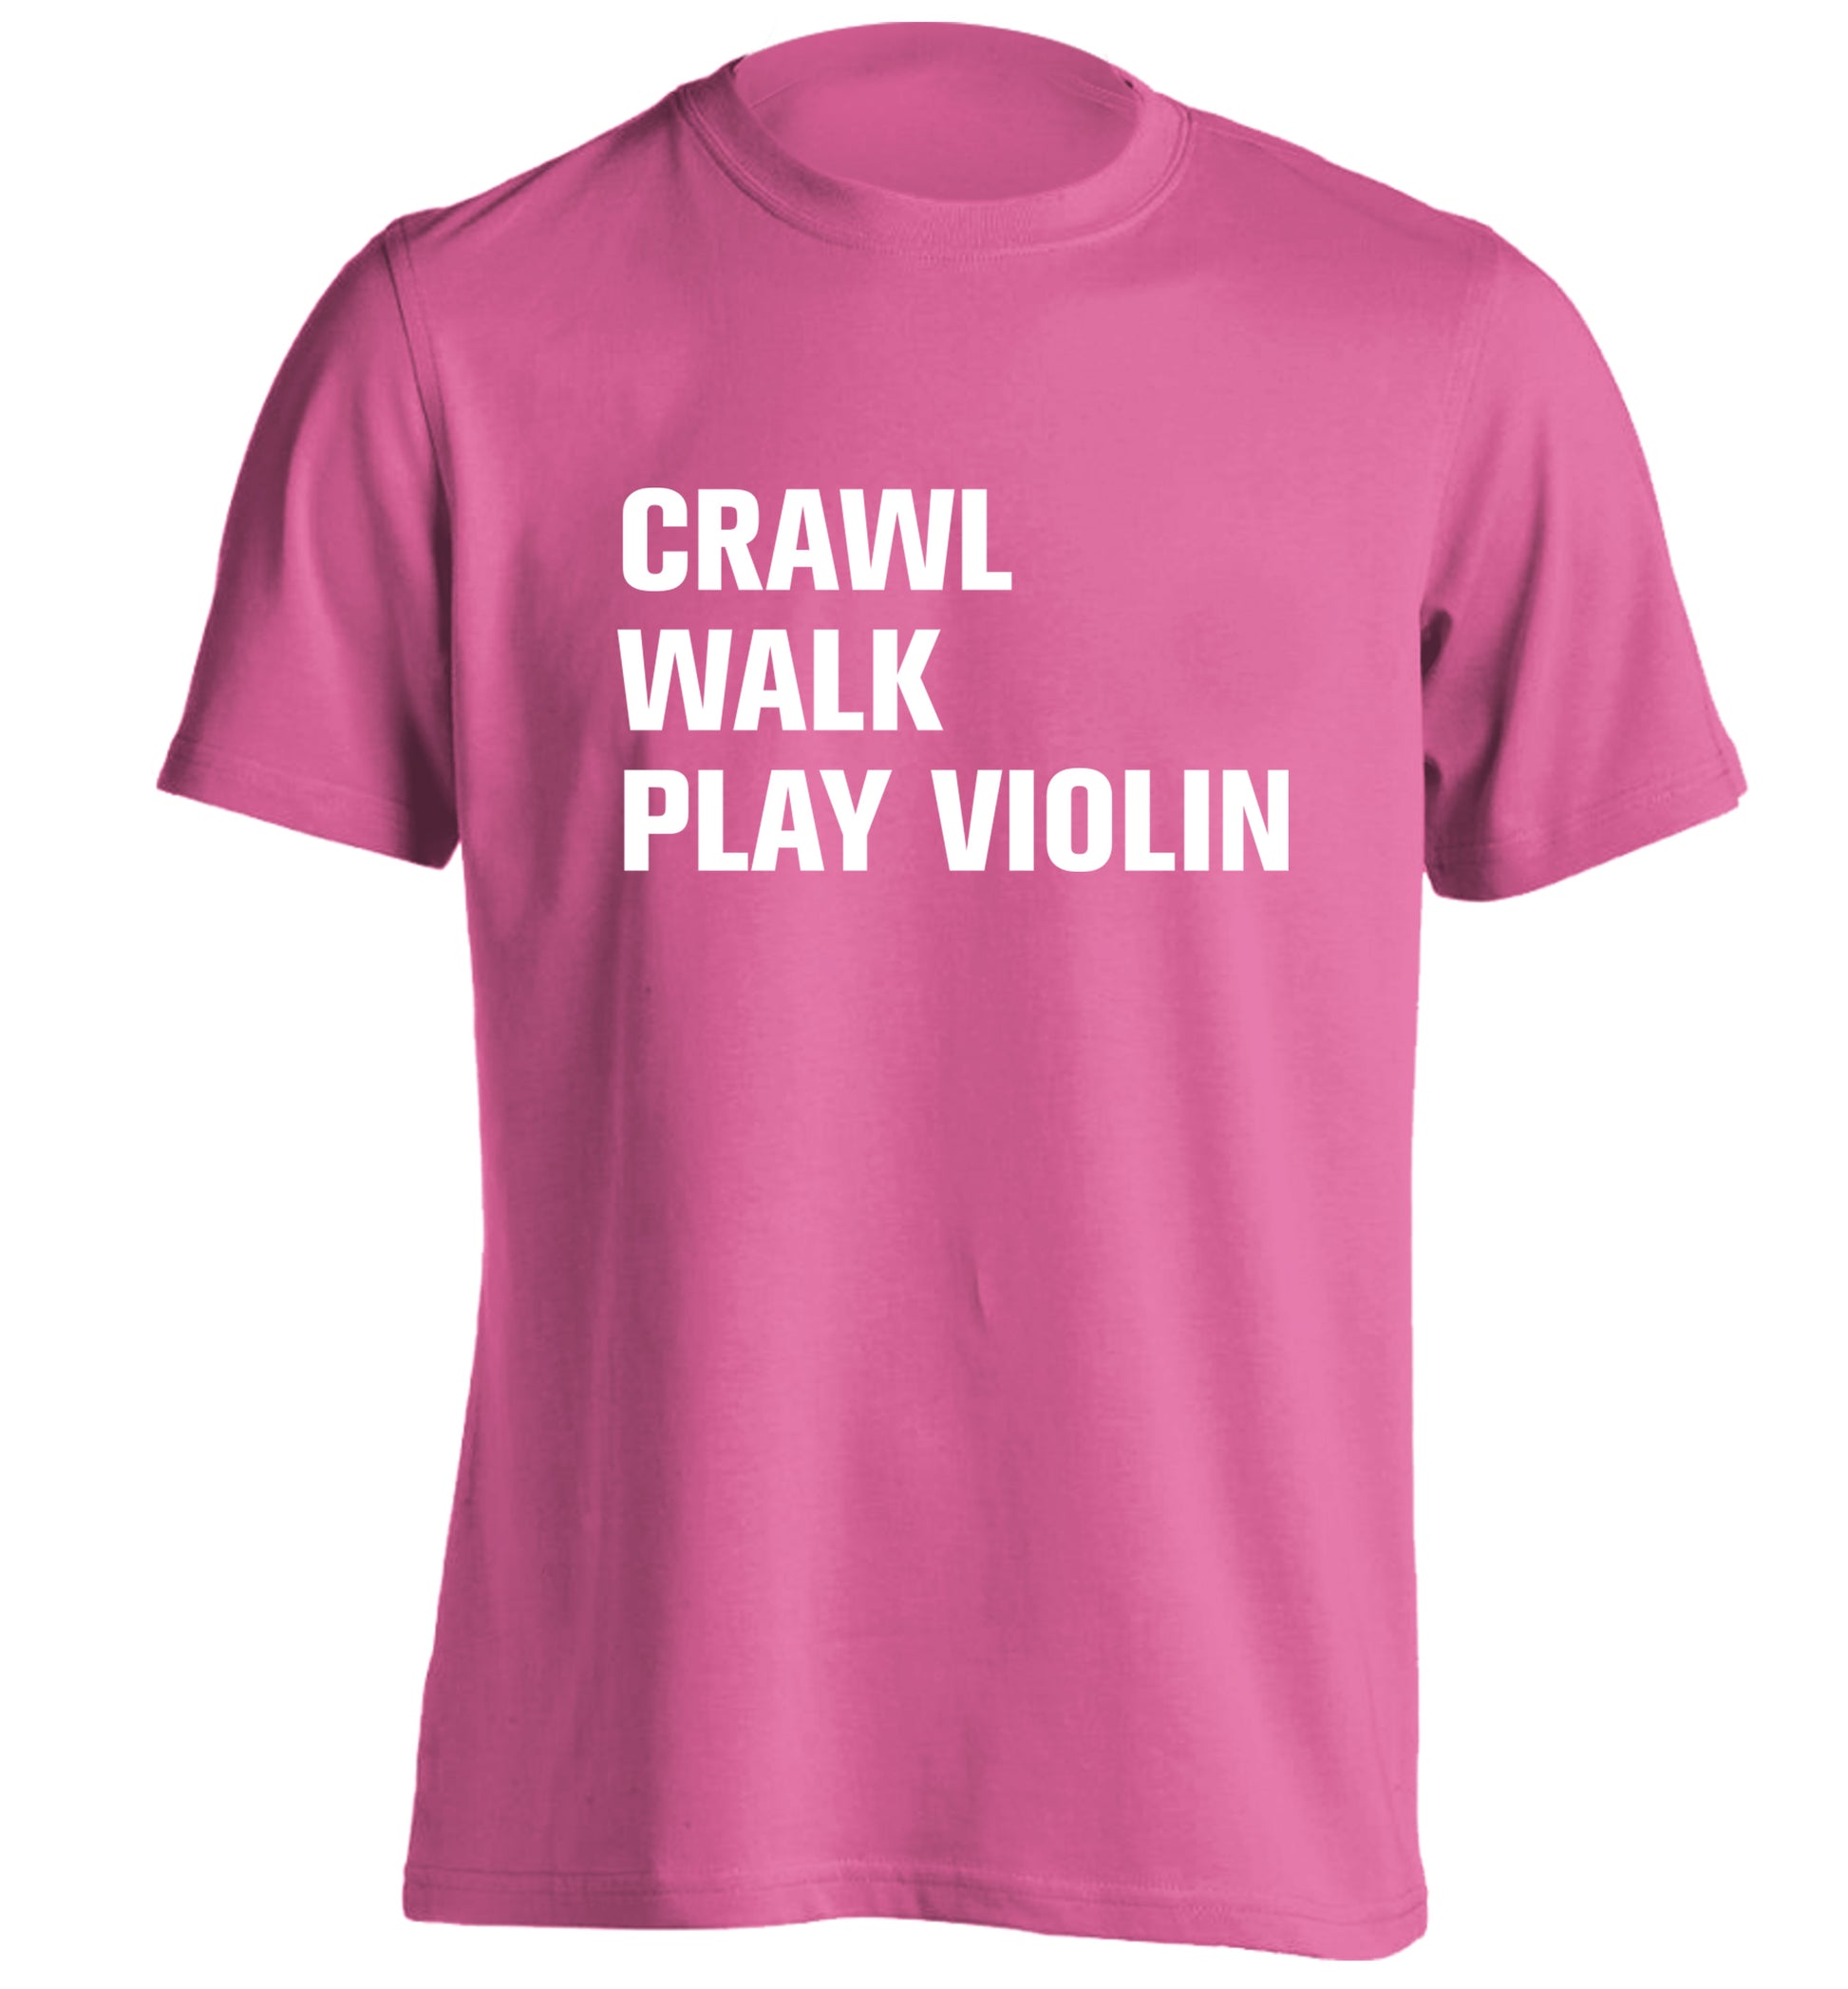 Crawl Walk Play Violin adults unisex pink Tshirt 2XL